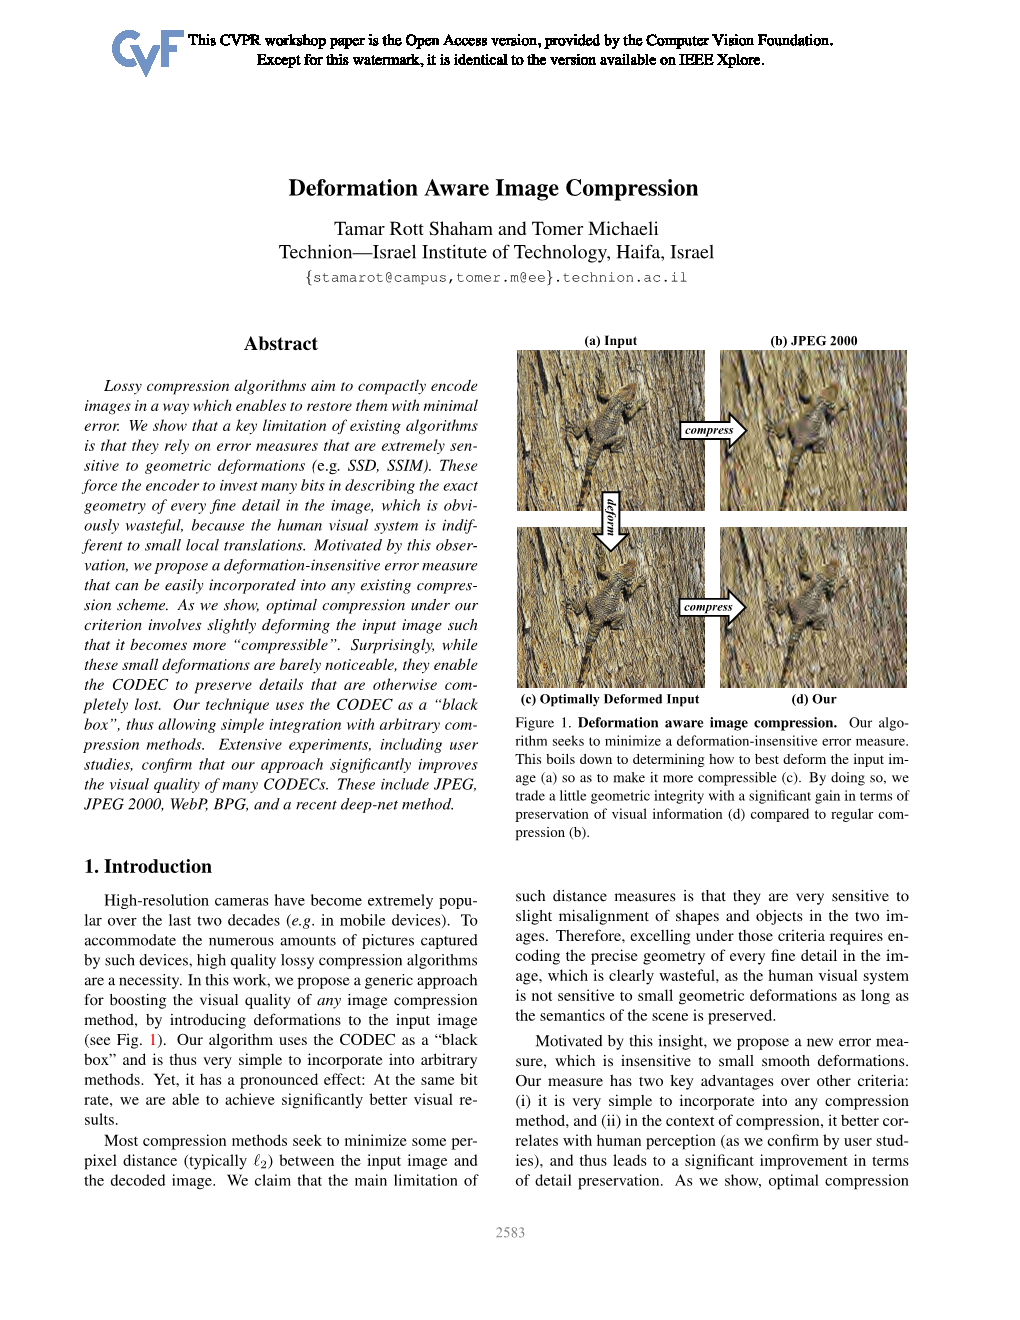 Deformation Aware Image Compression